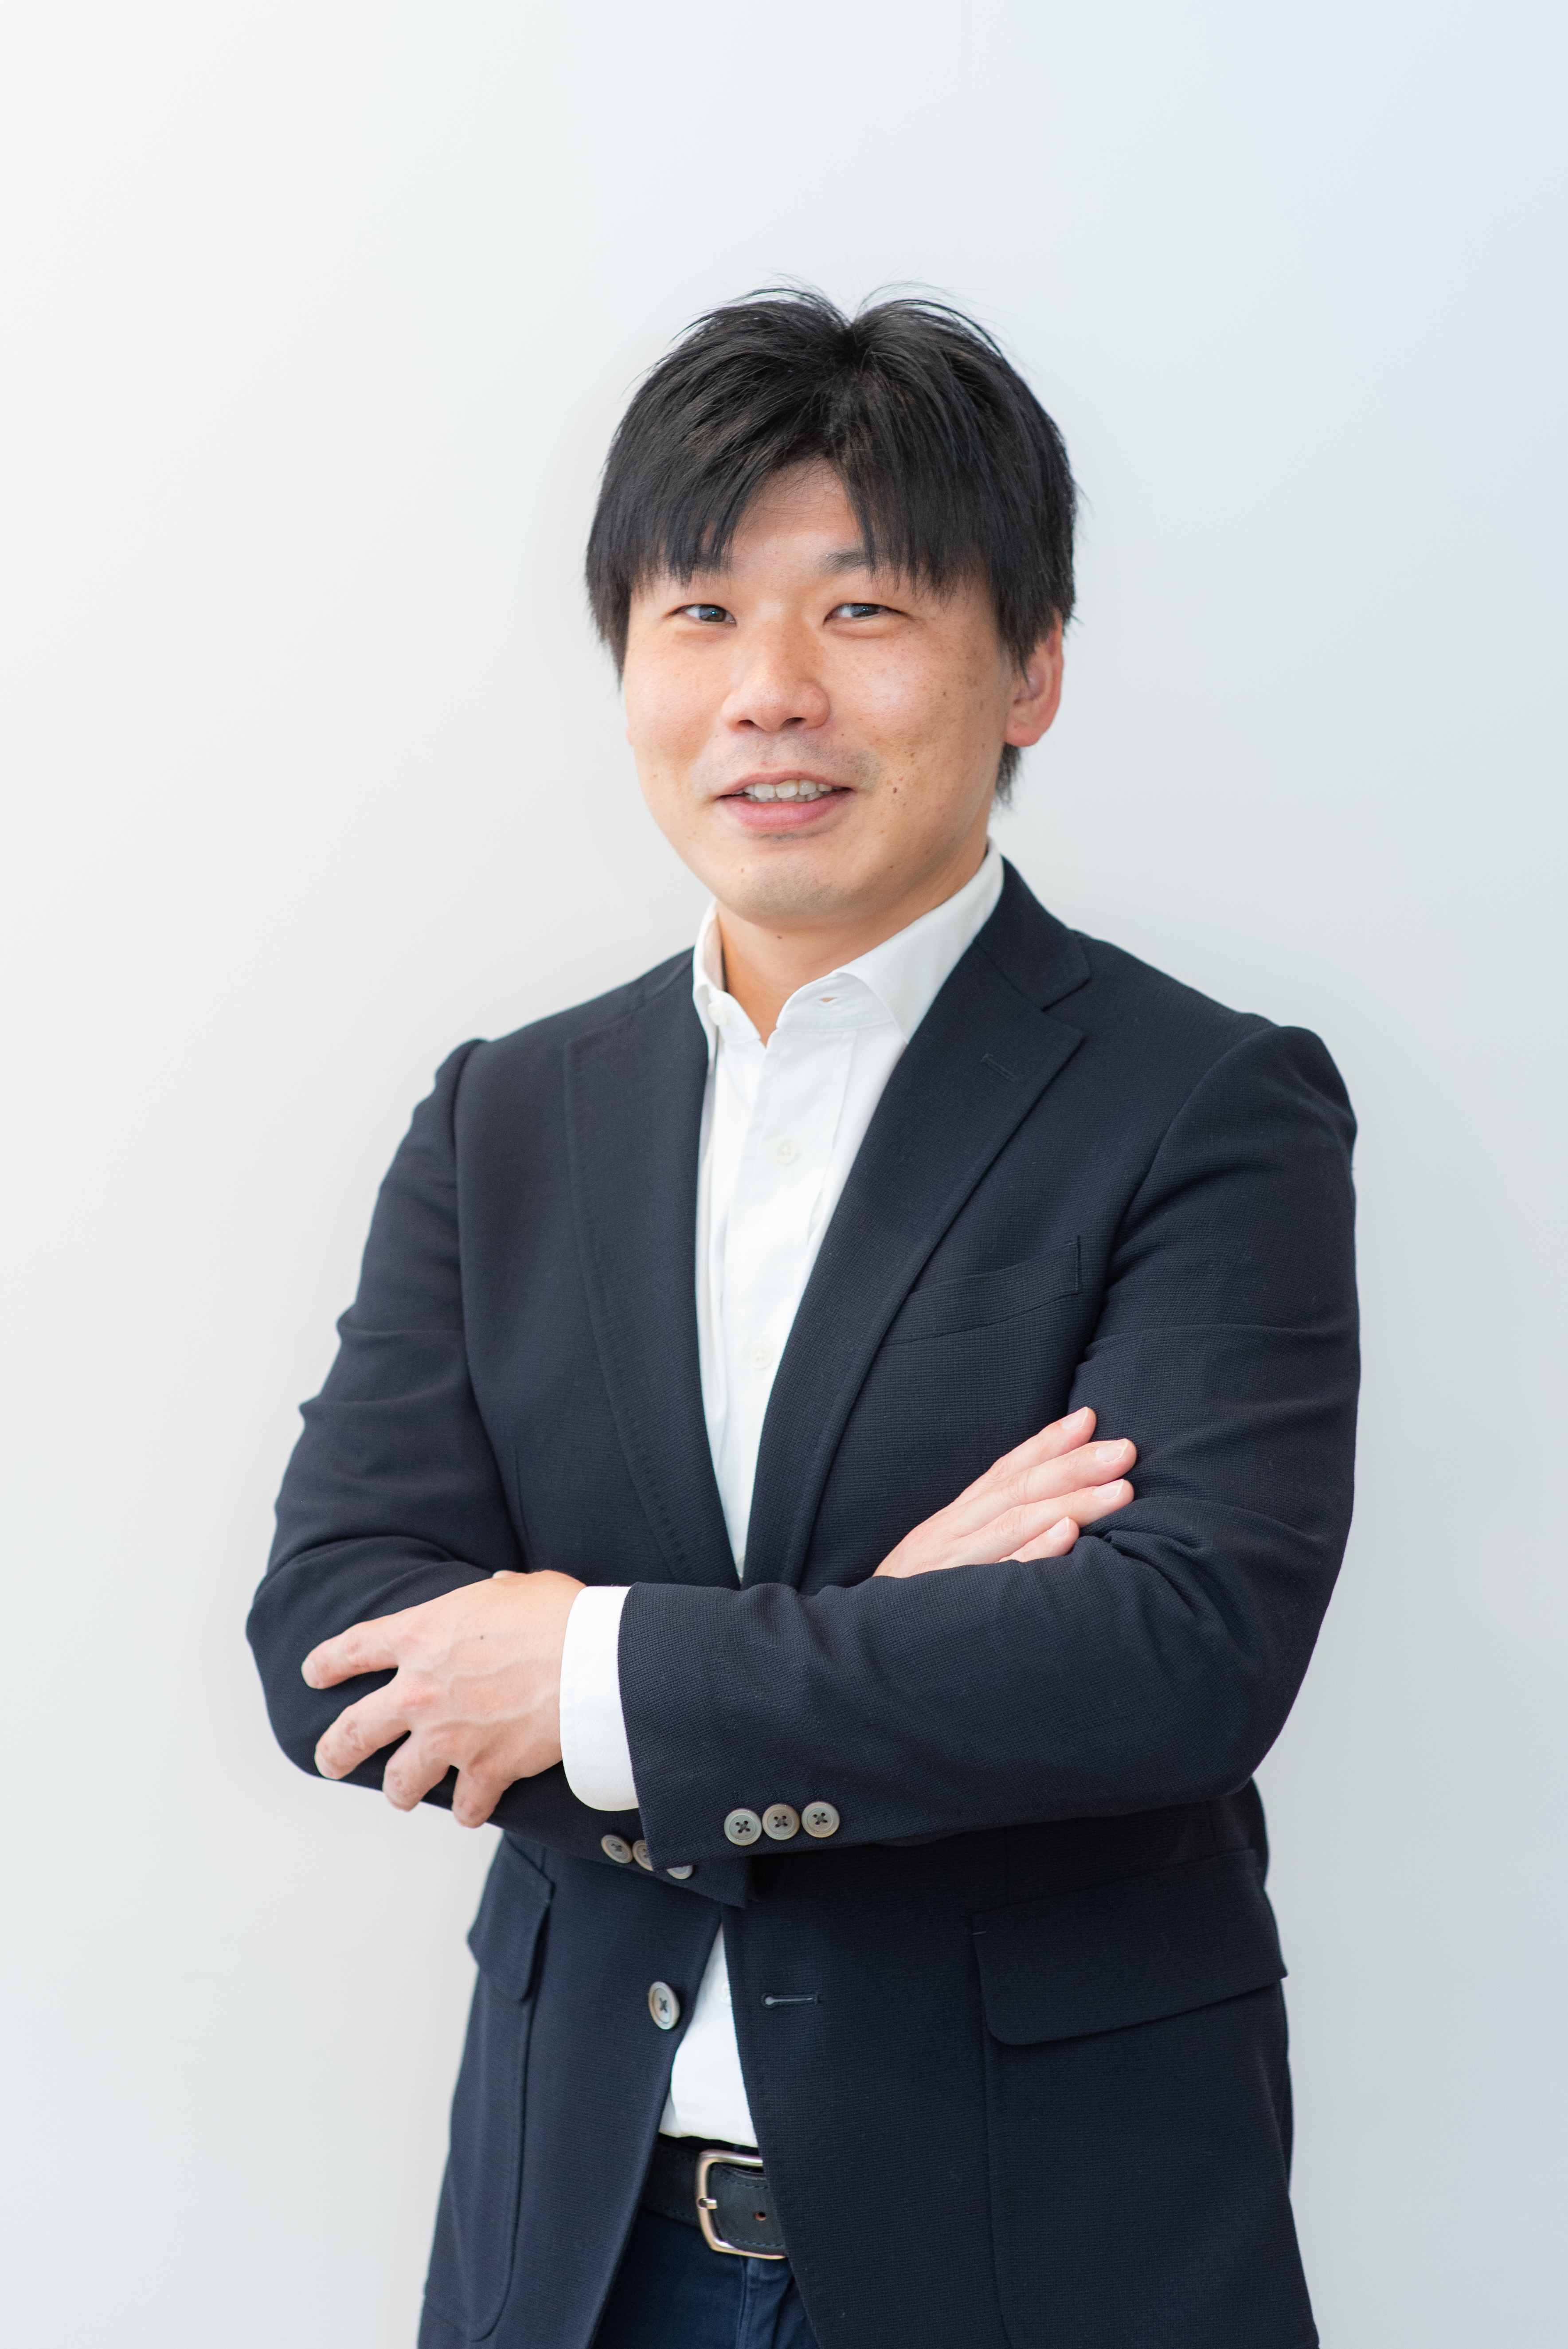 CEOの太田は外資系投資銀行、投資ファンドを経てコンシェルジュを創業